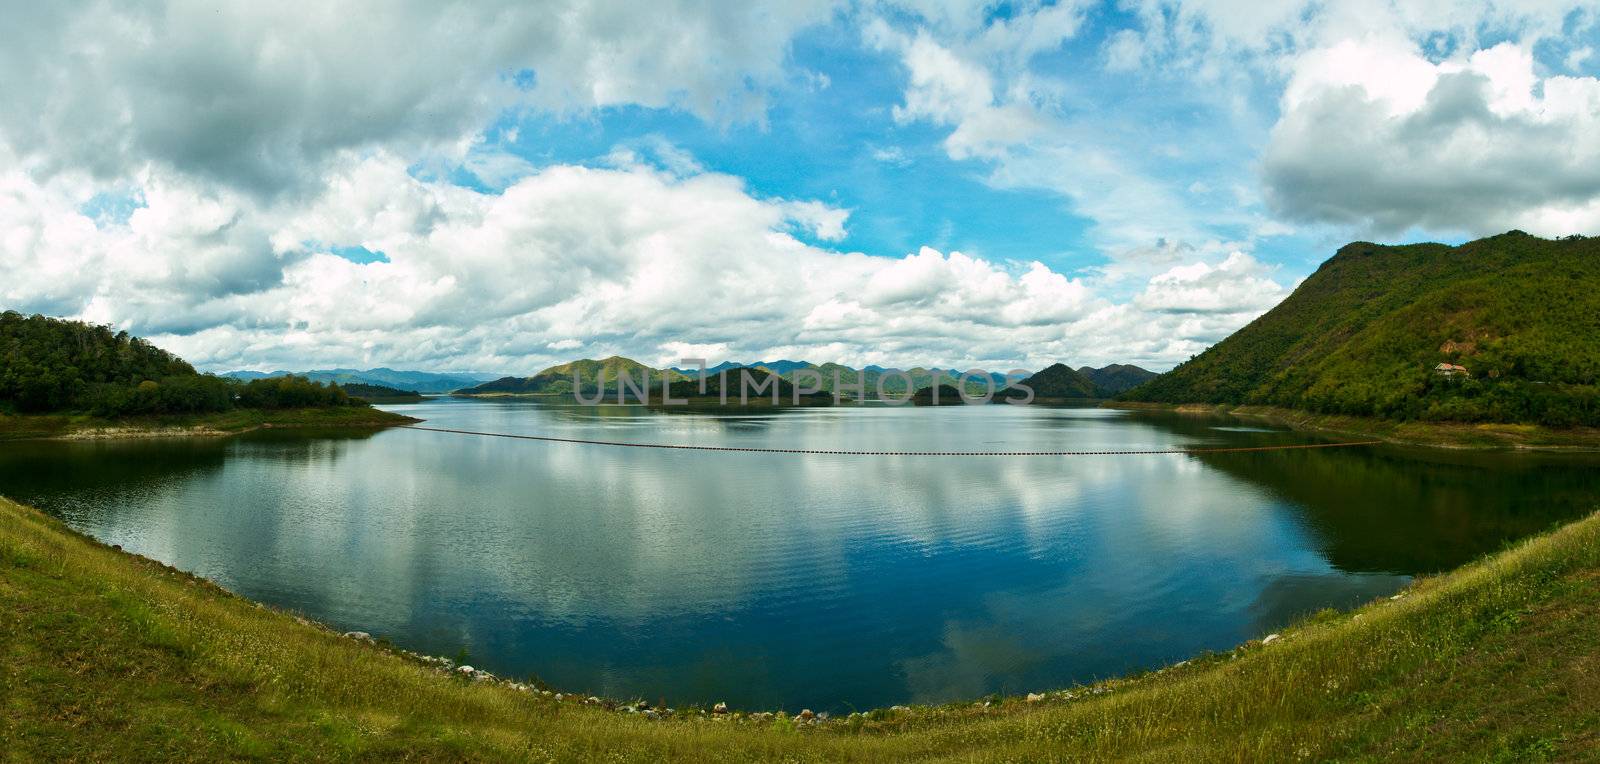 Mountain Lake with blue sky